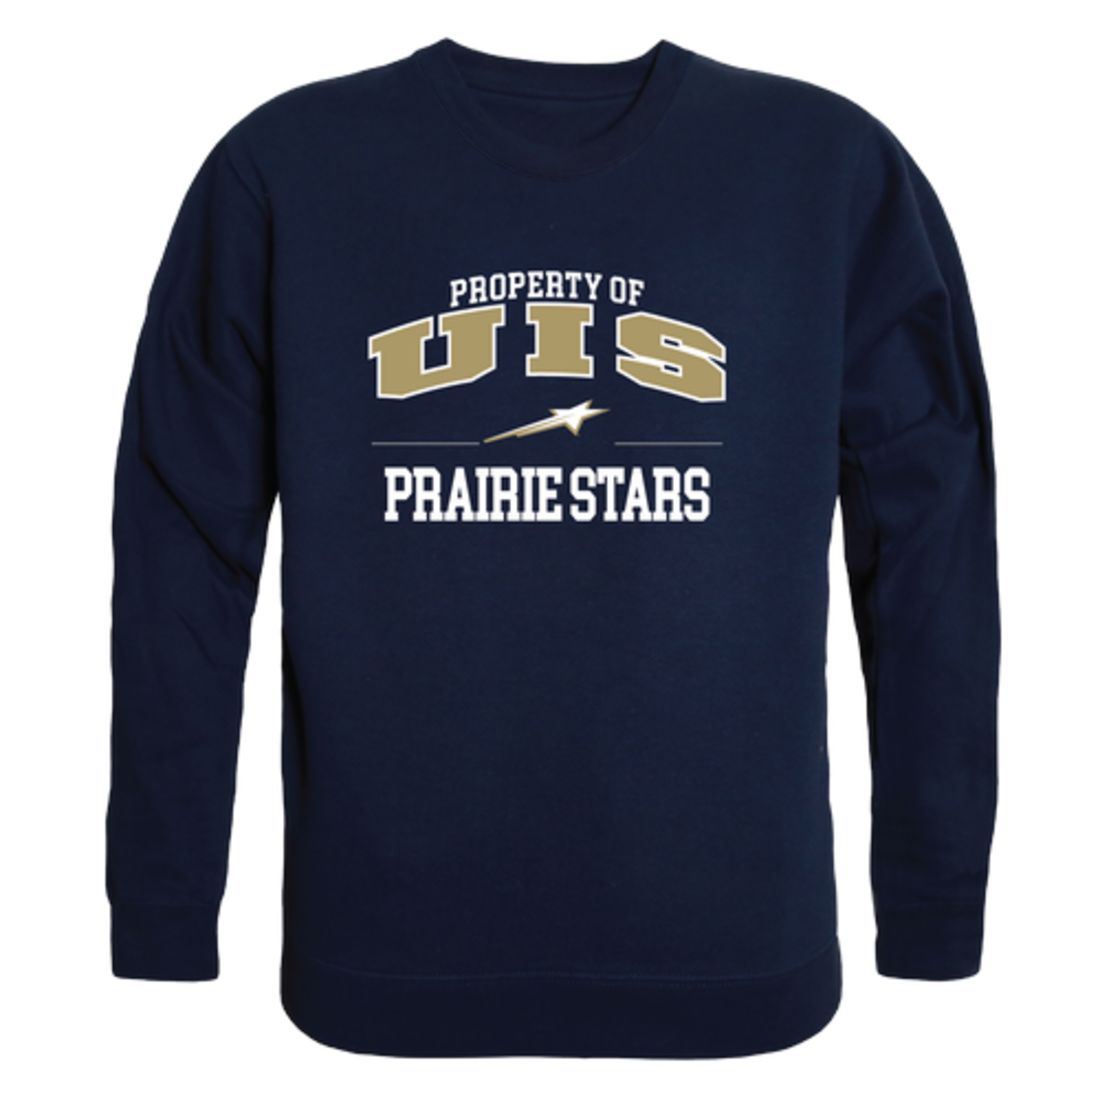 University-of-Illinois-Springfield-Prairie-Stars-Property-Fleece-Crewneck-Pullover-Sweatshirt